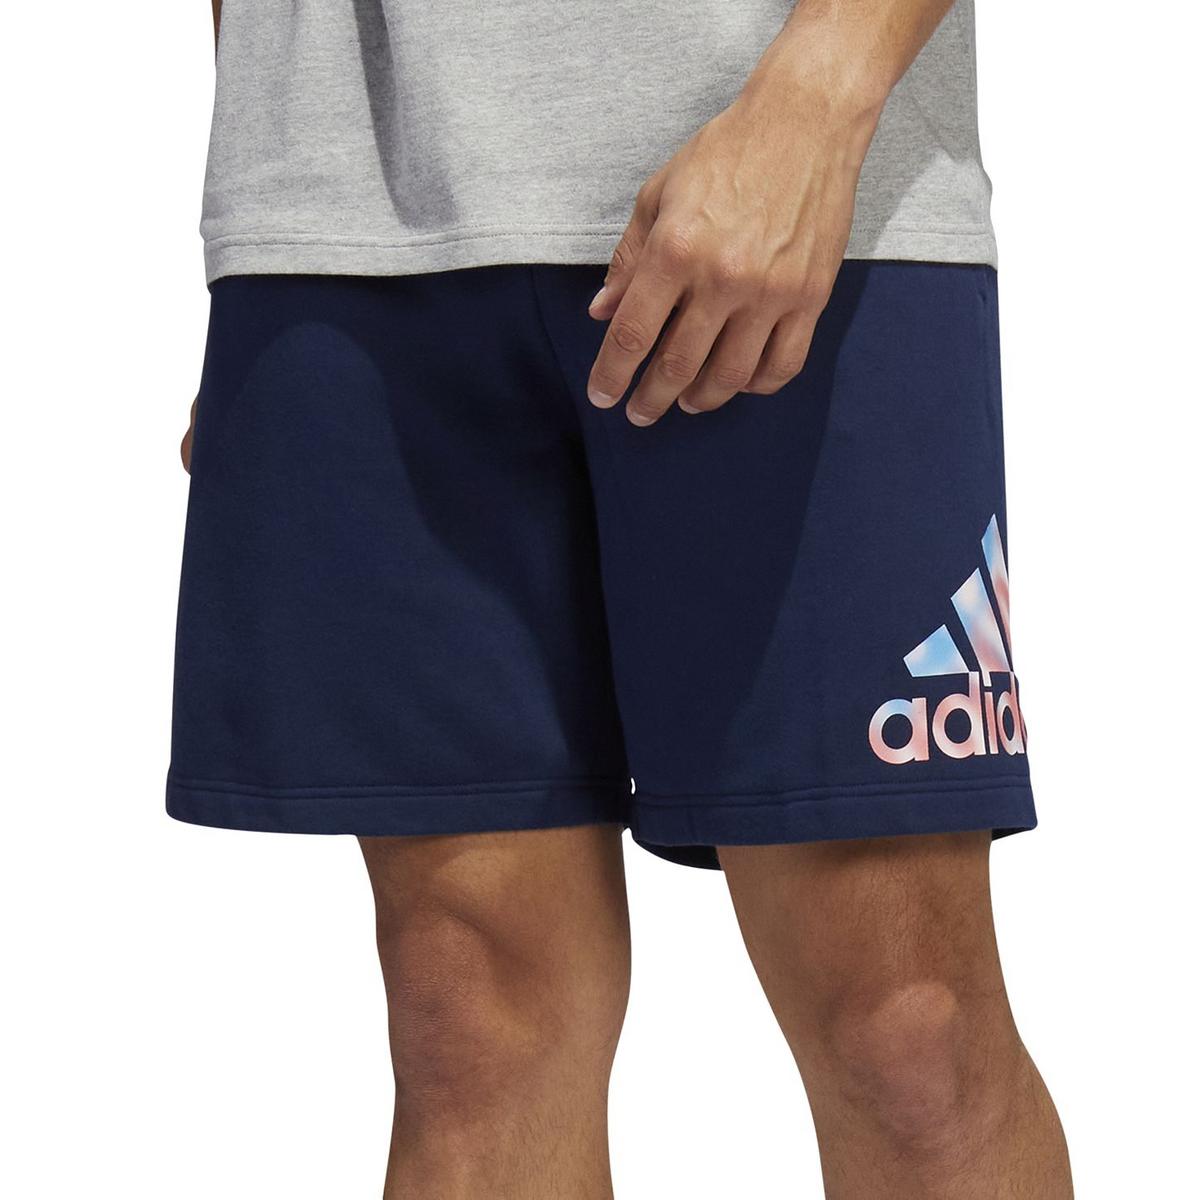 Adidas Mens Logo Fitness Shorts